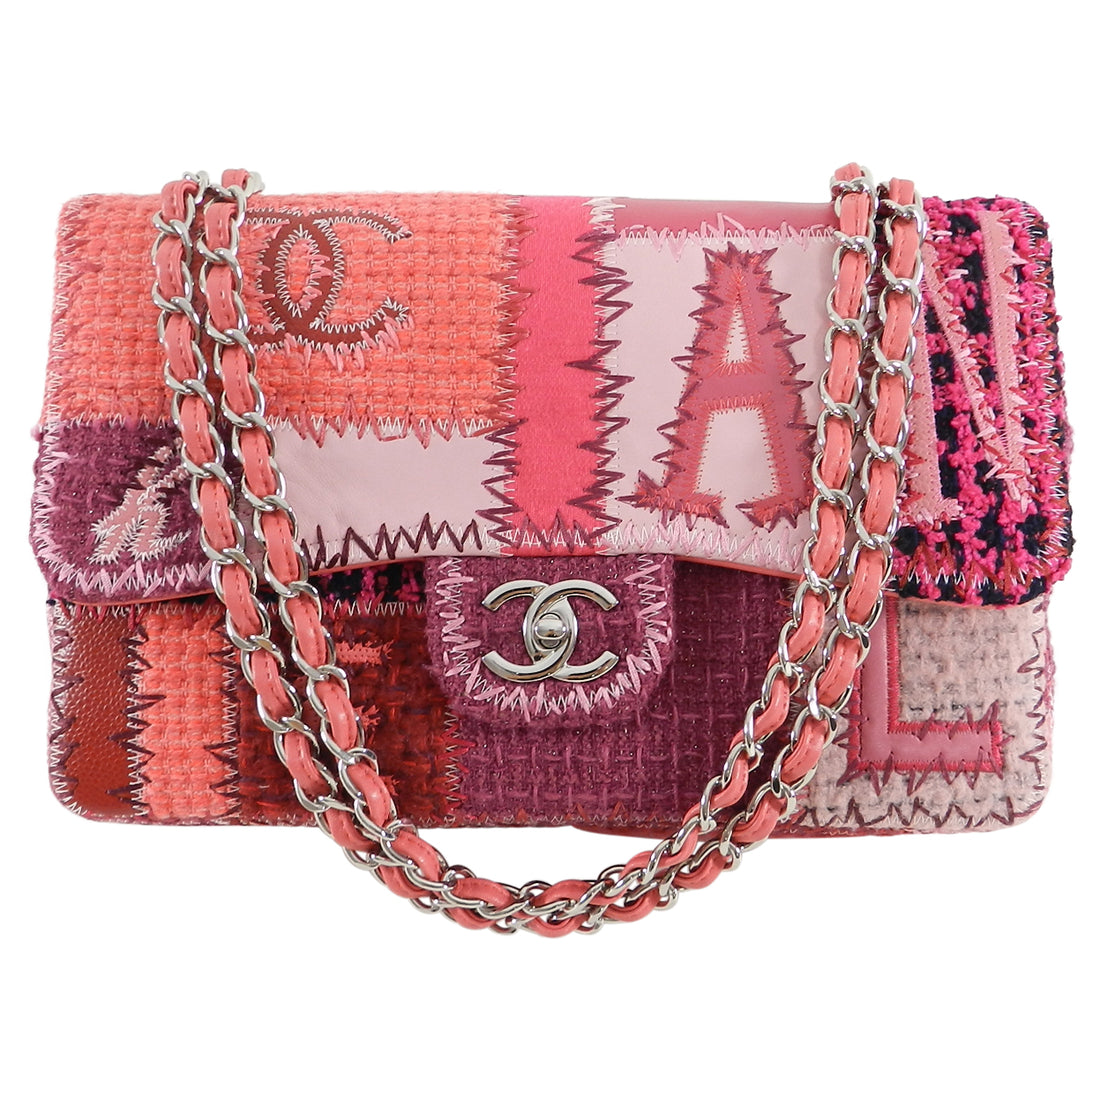 Chanel Pink Tweed Patchwork Coco Chanel Jumbo Flap Bag – I MISS